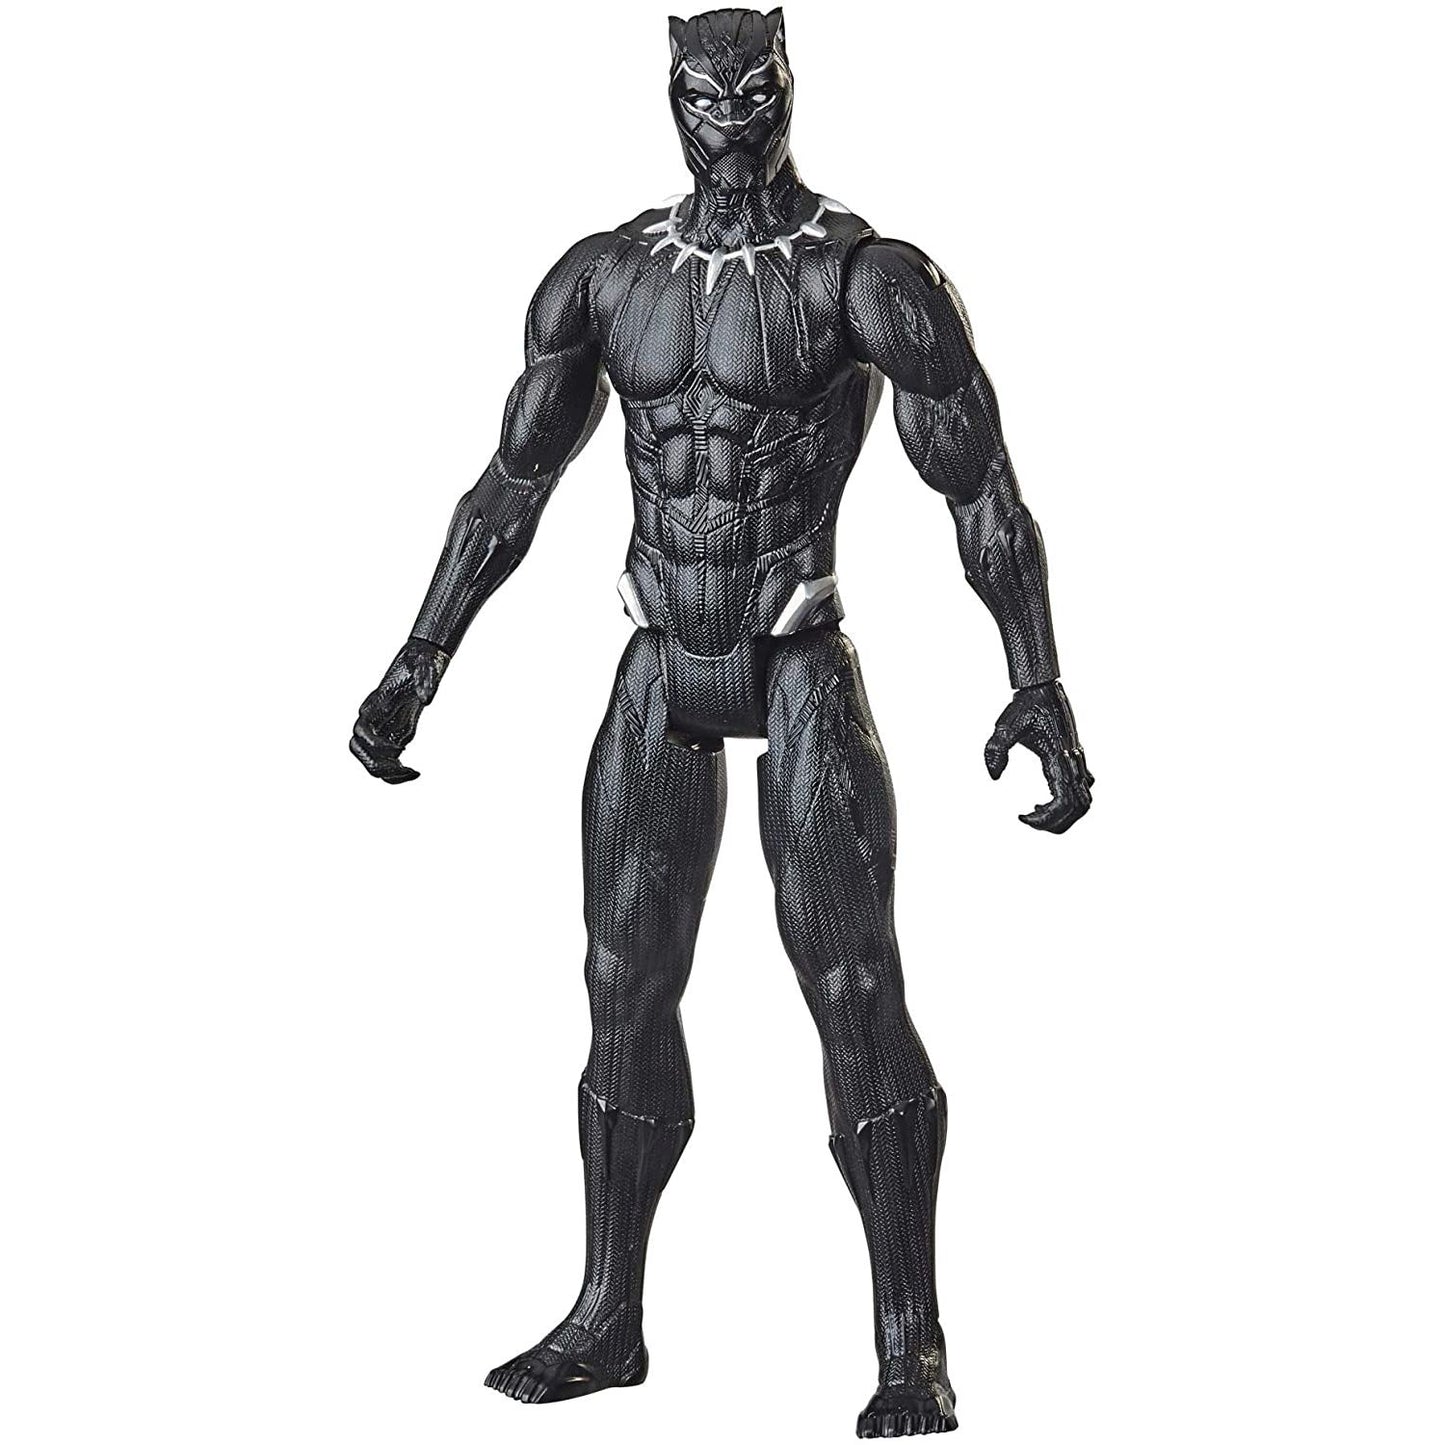 Hasbro Avengers - Figura Black Panther 30cm